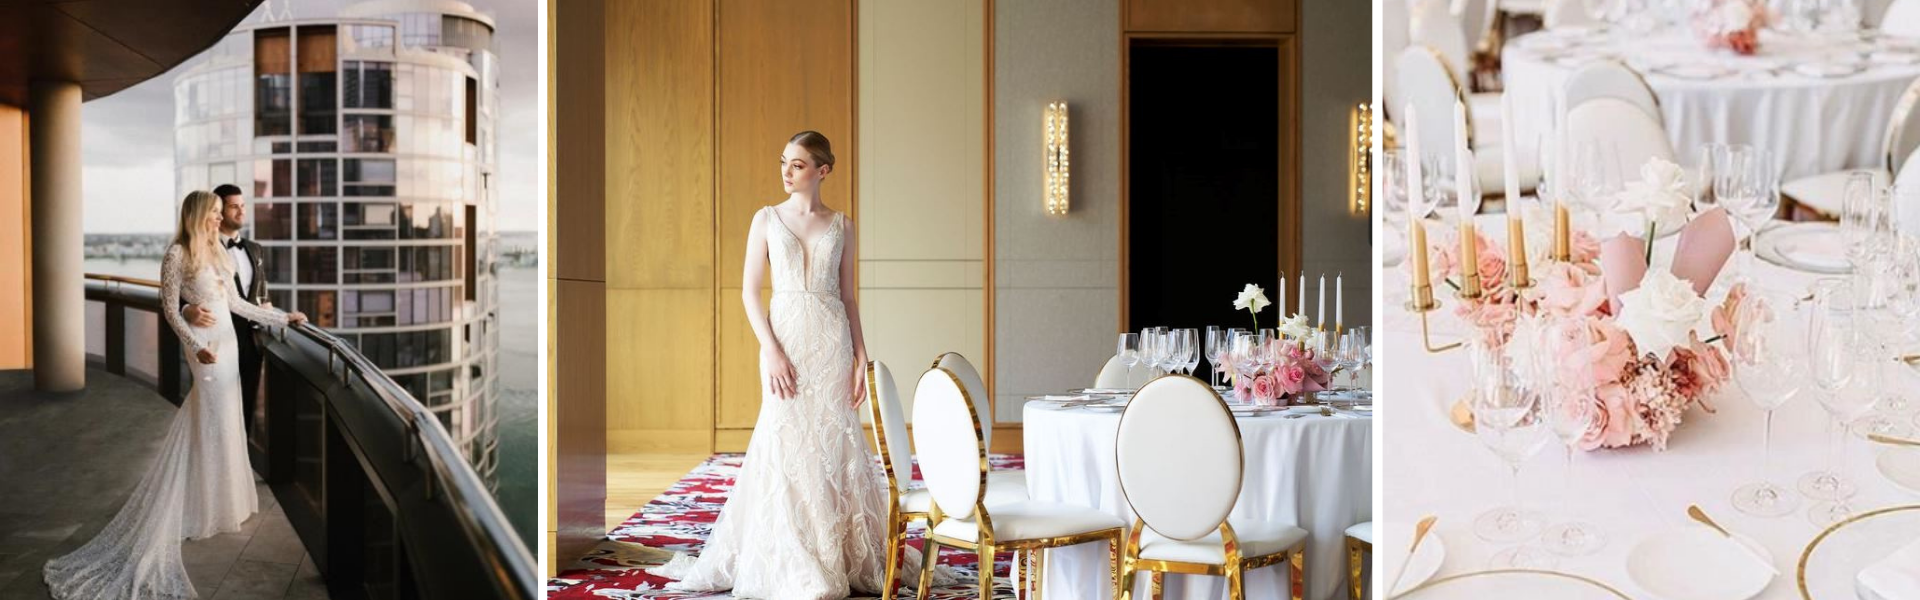 Ritz Carlton Perth Wedding Venue with Luxury Accommodation